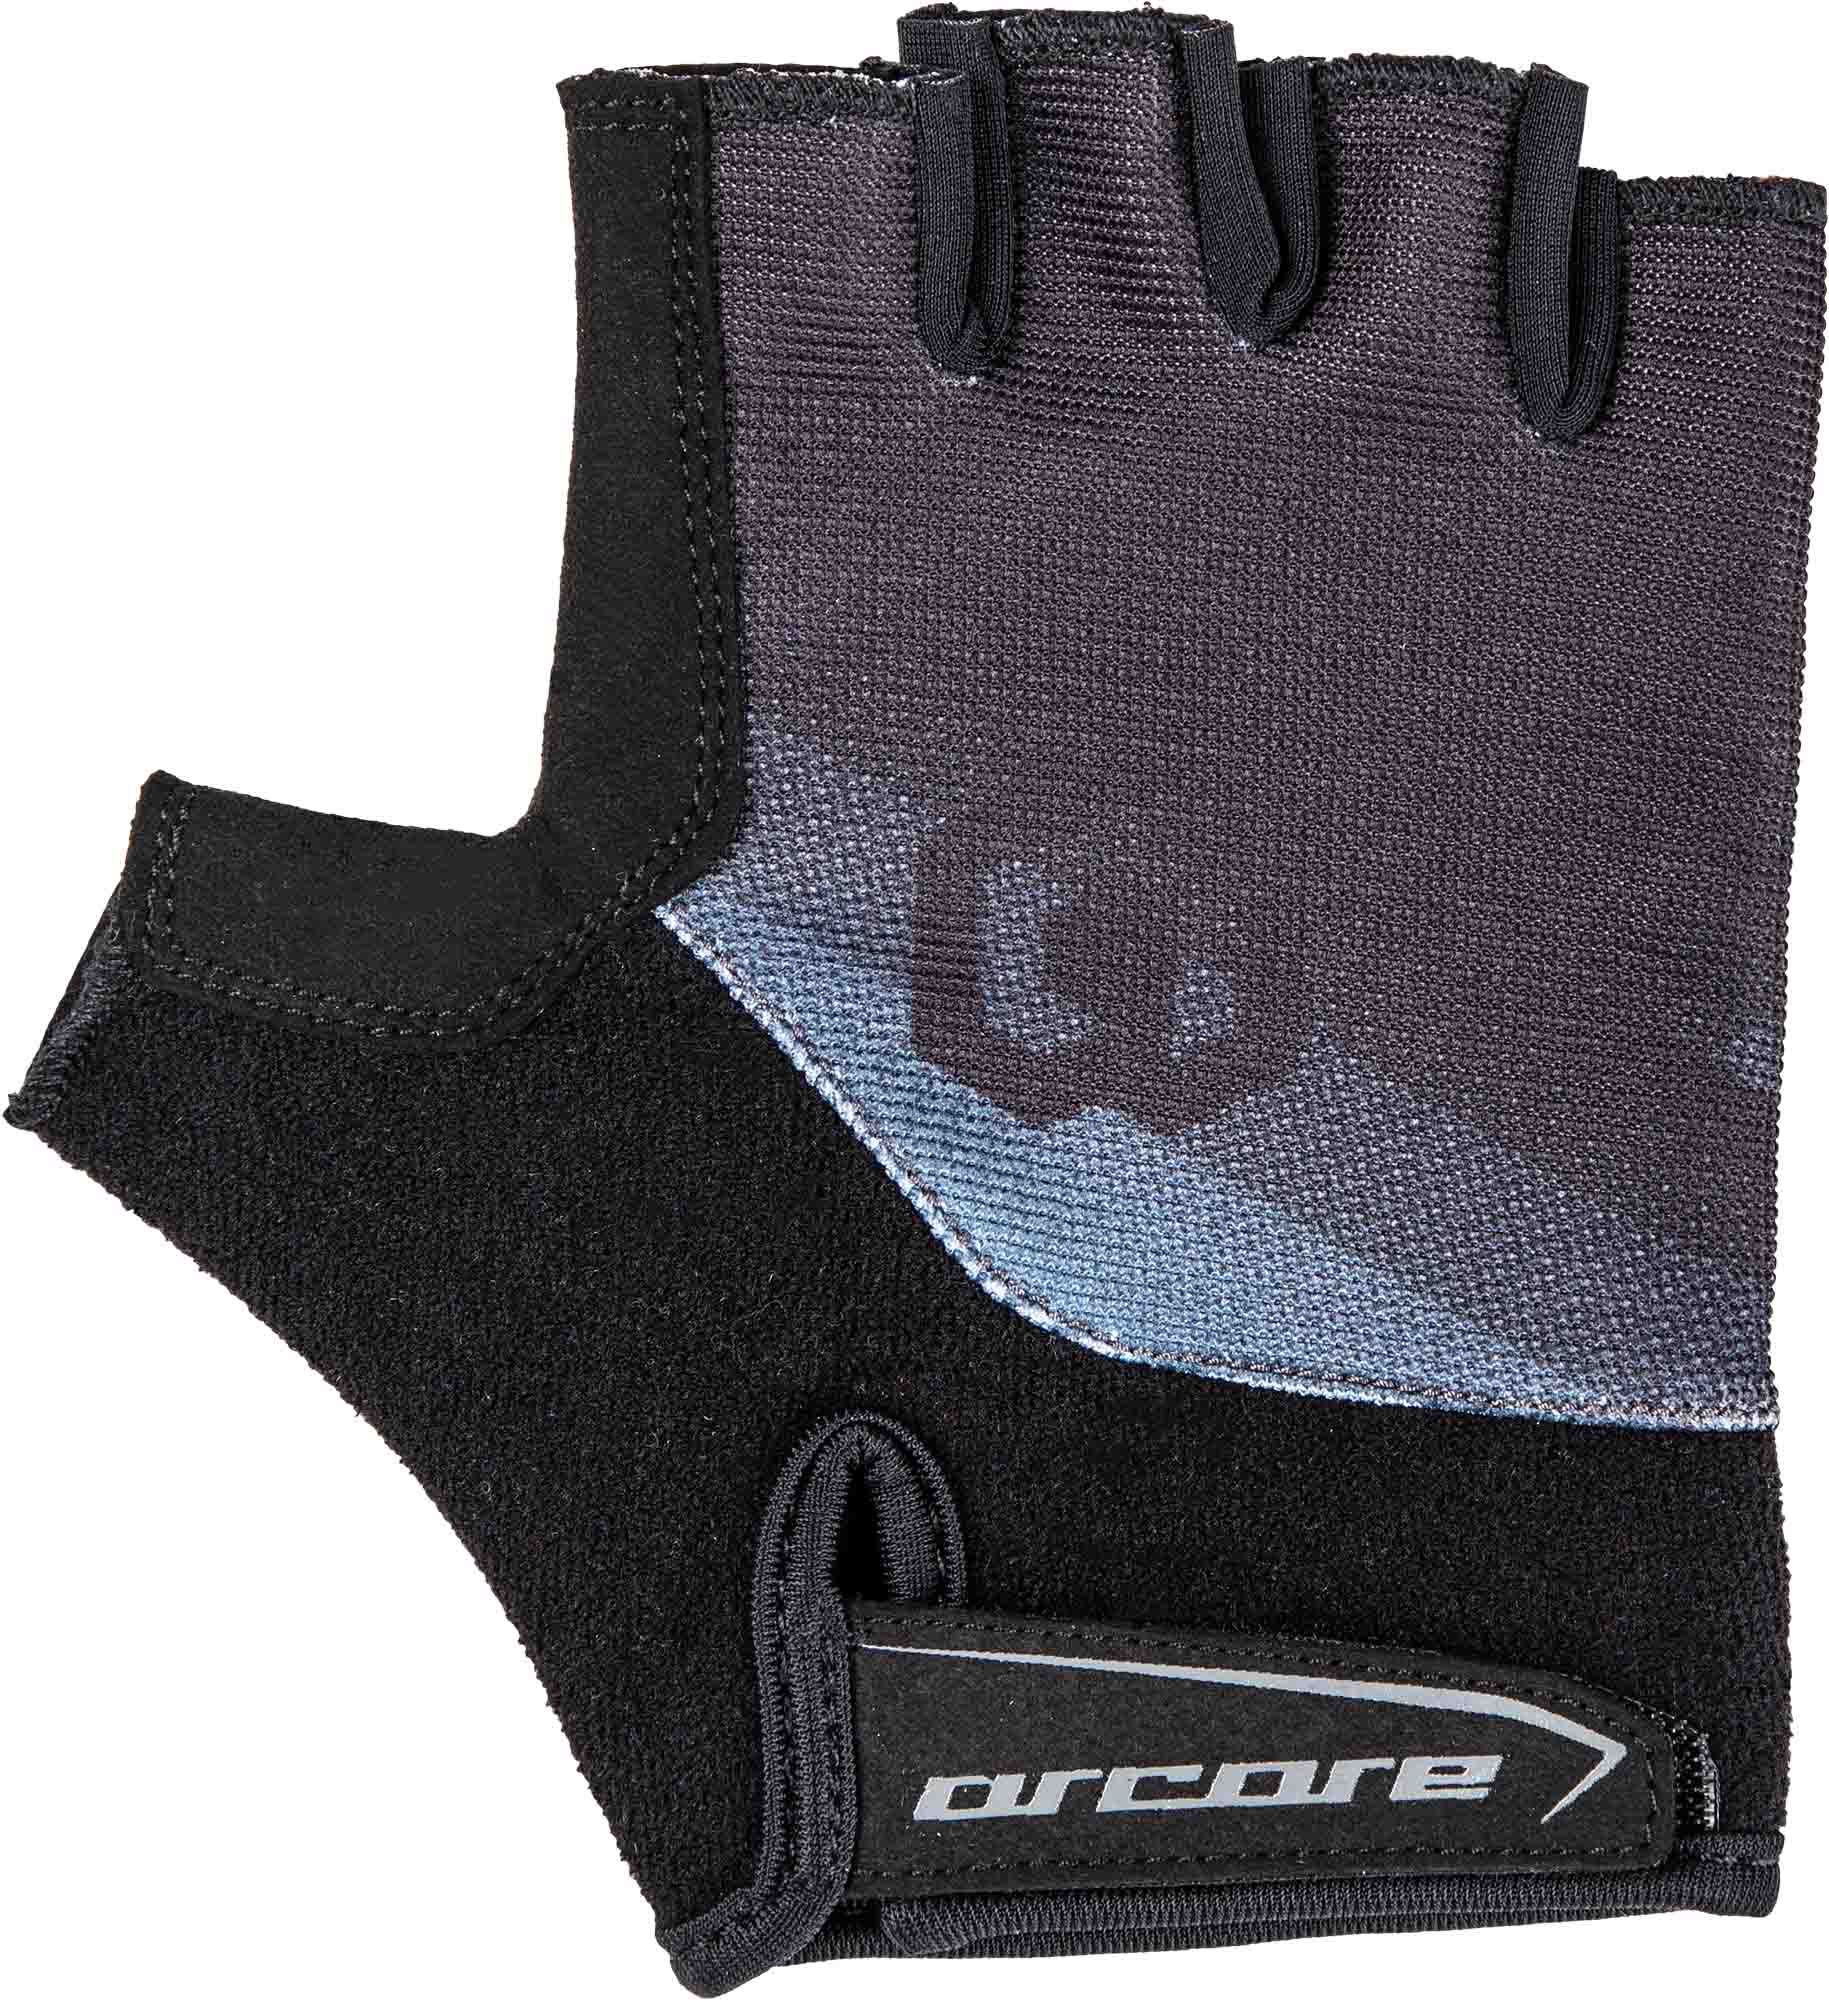 Short finger cycling gloves